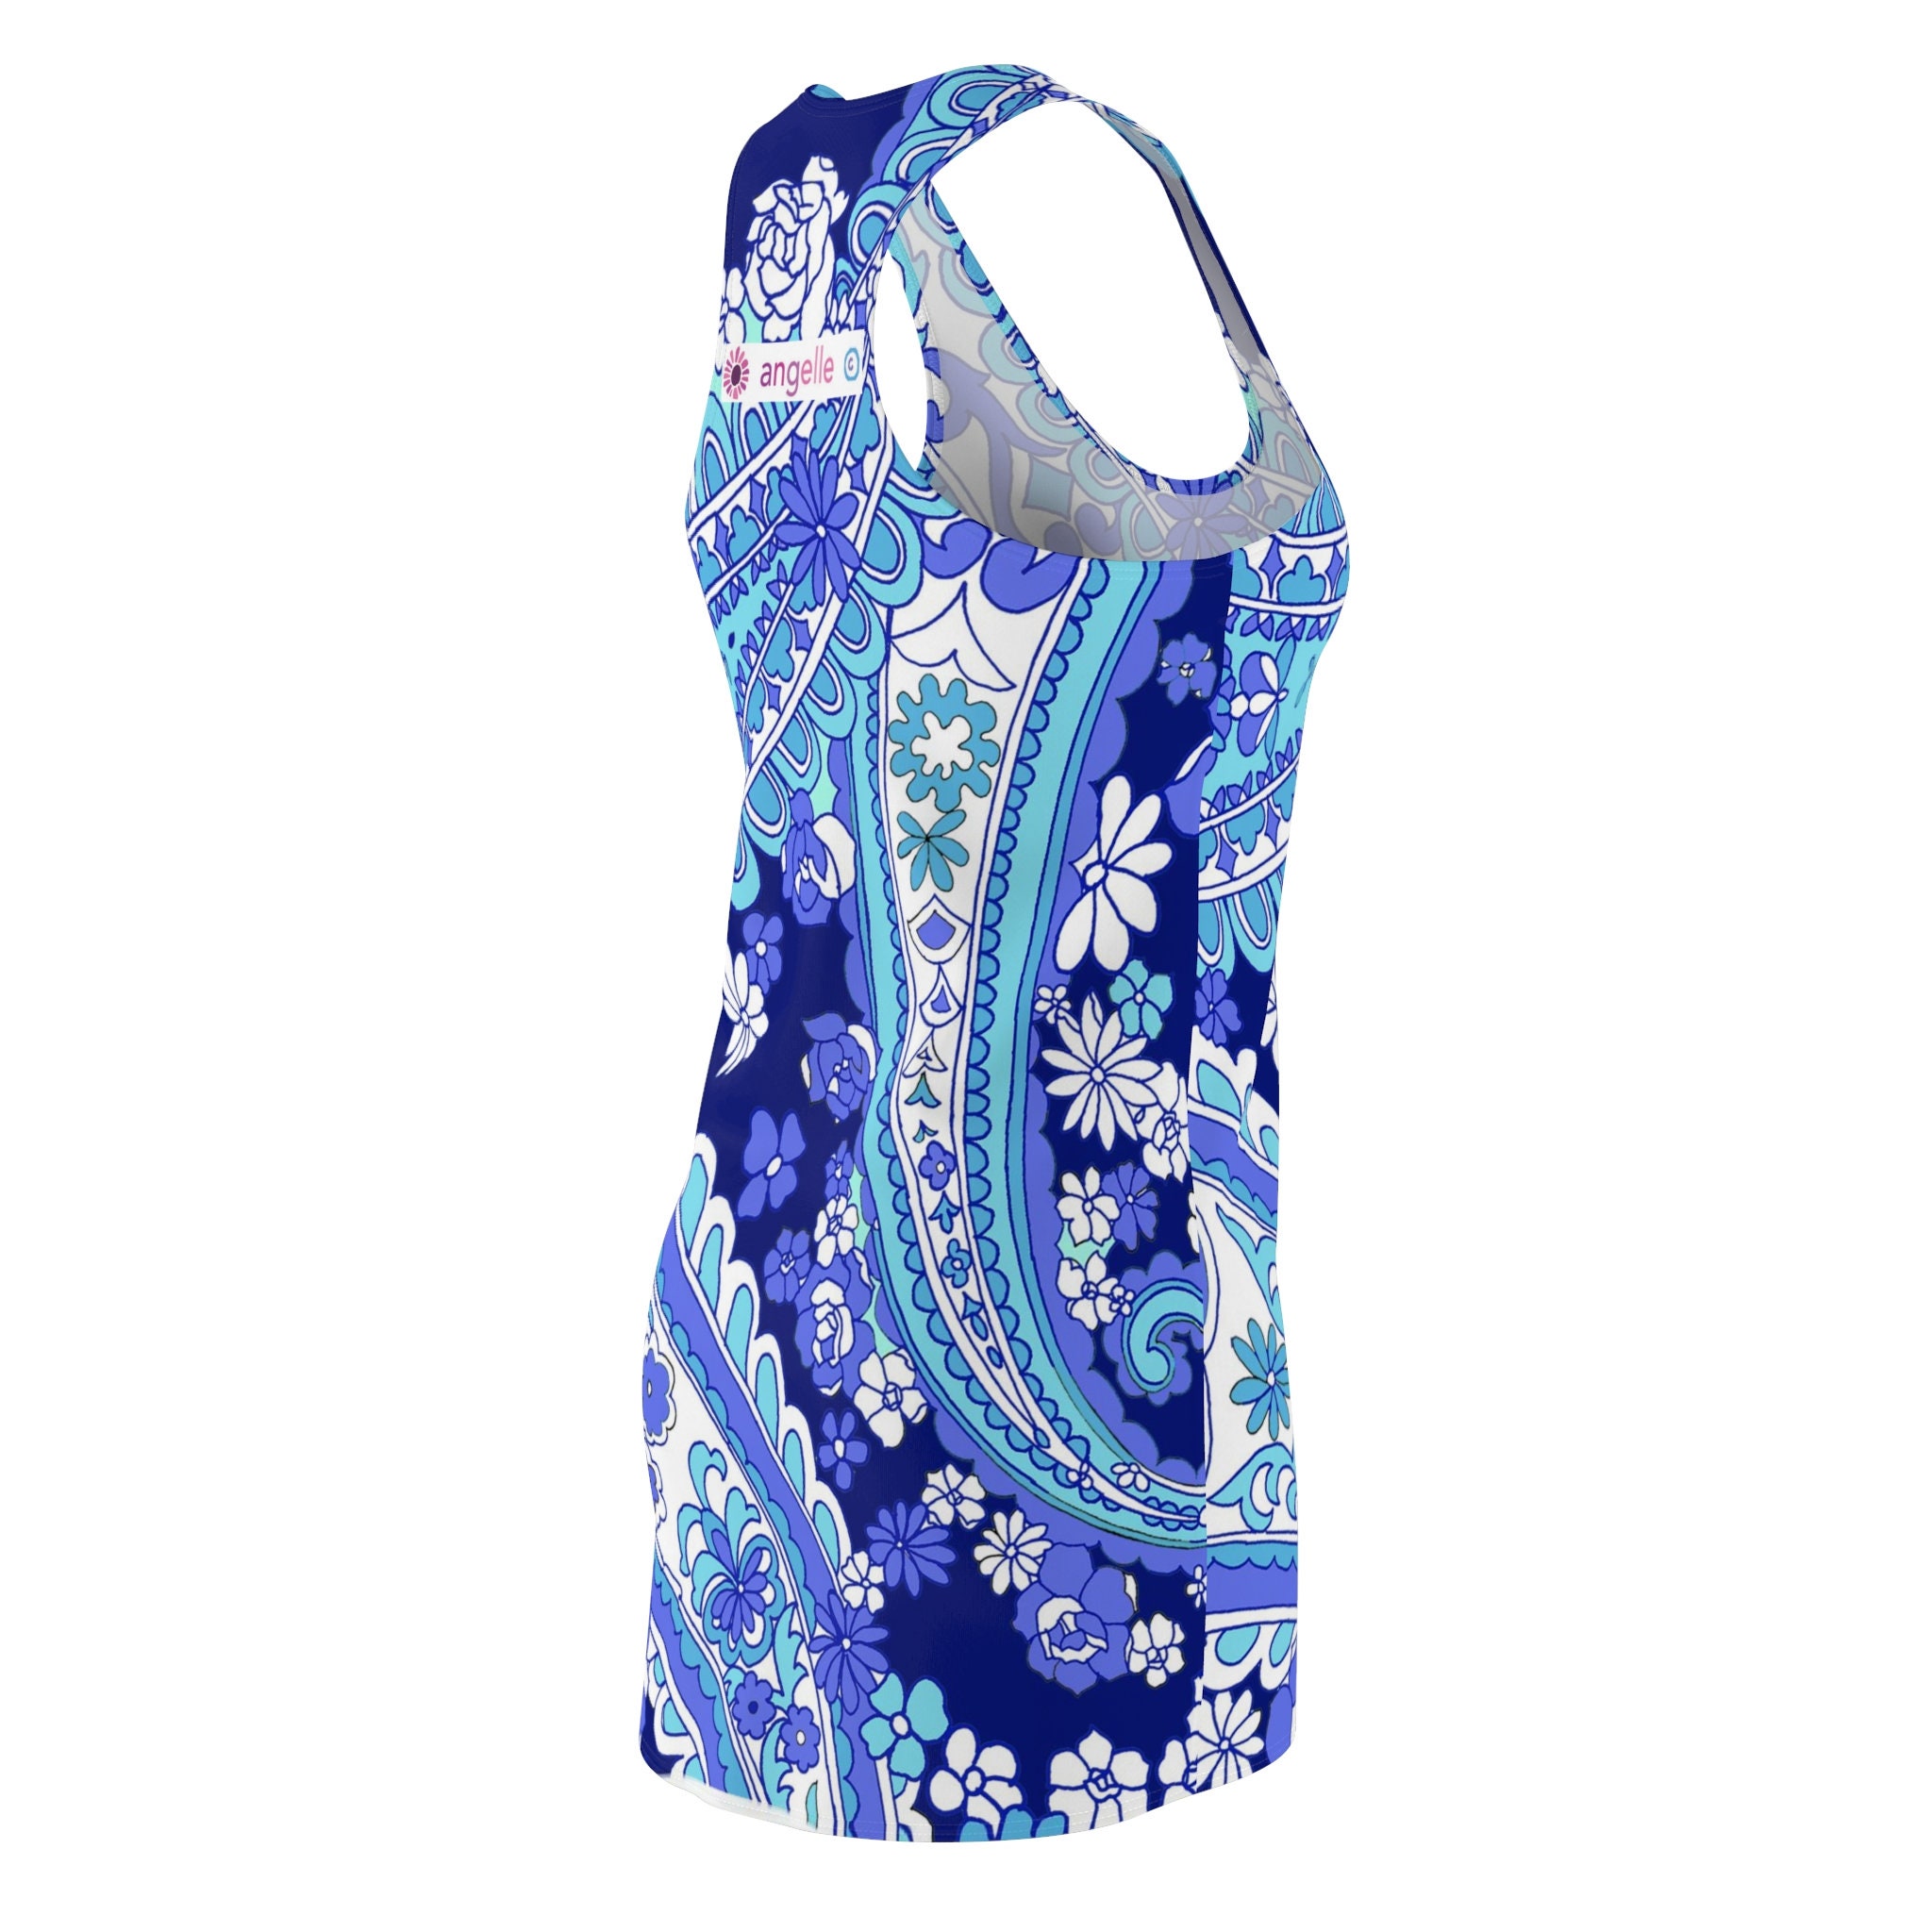 Paisley Blue Women's Cut & Sew Racerback Dress